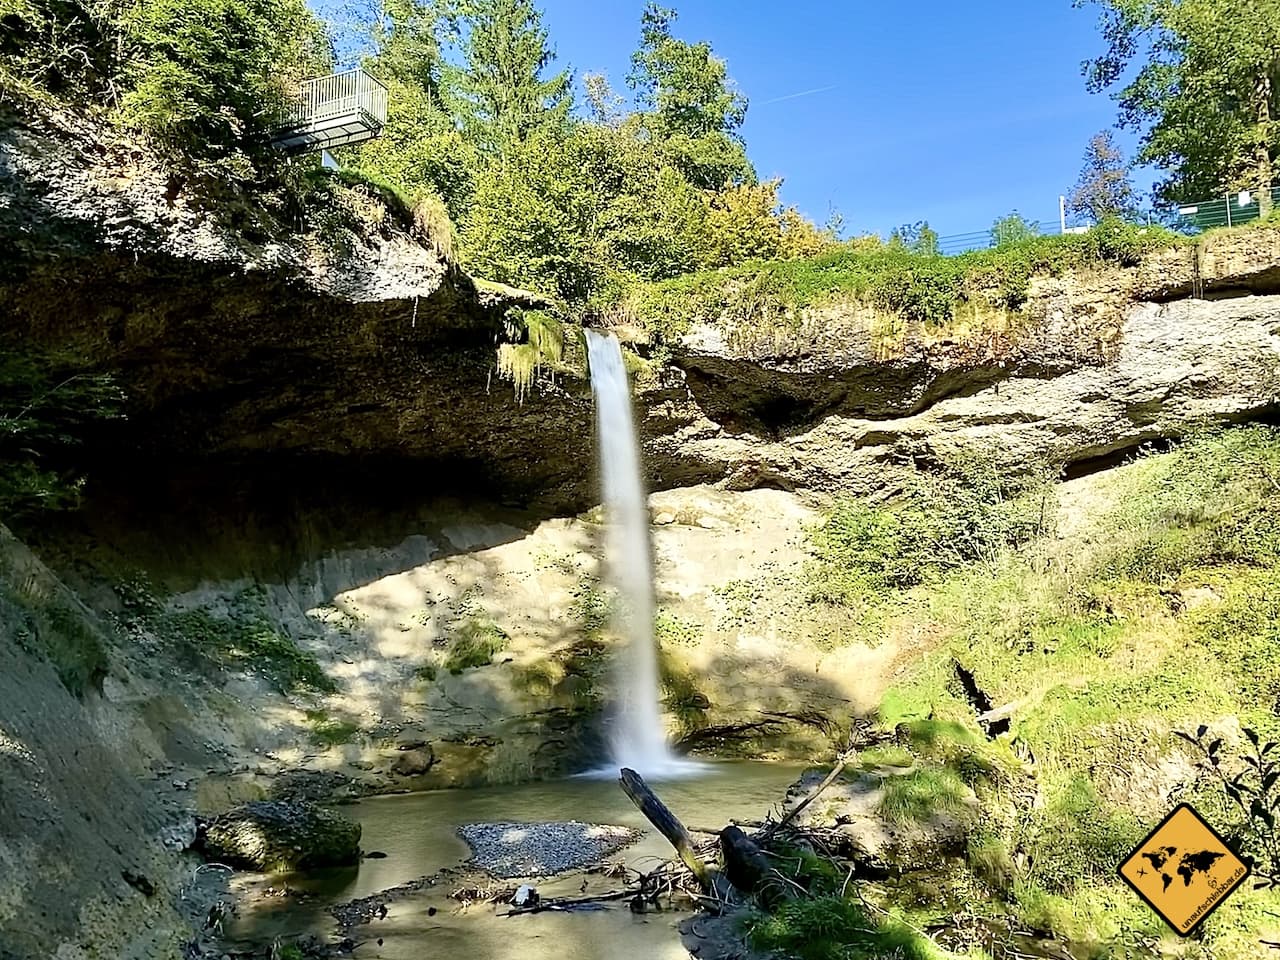 Erster großer Wasserfall Scheidegg 22 Meter